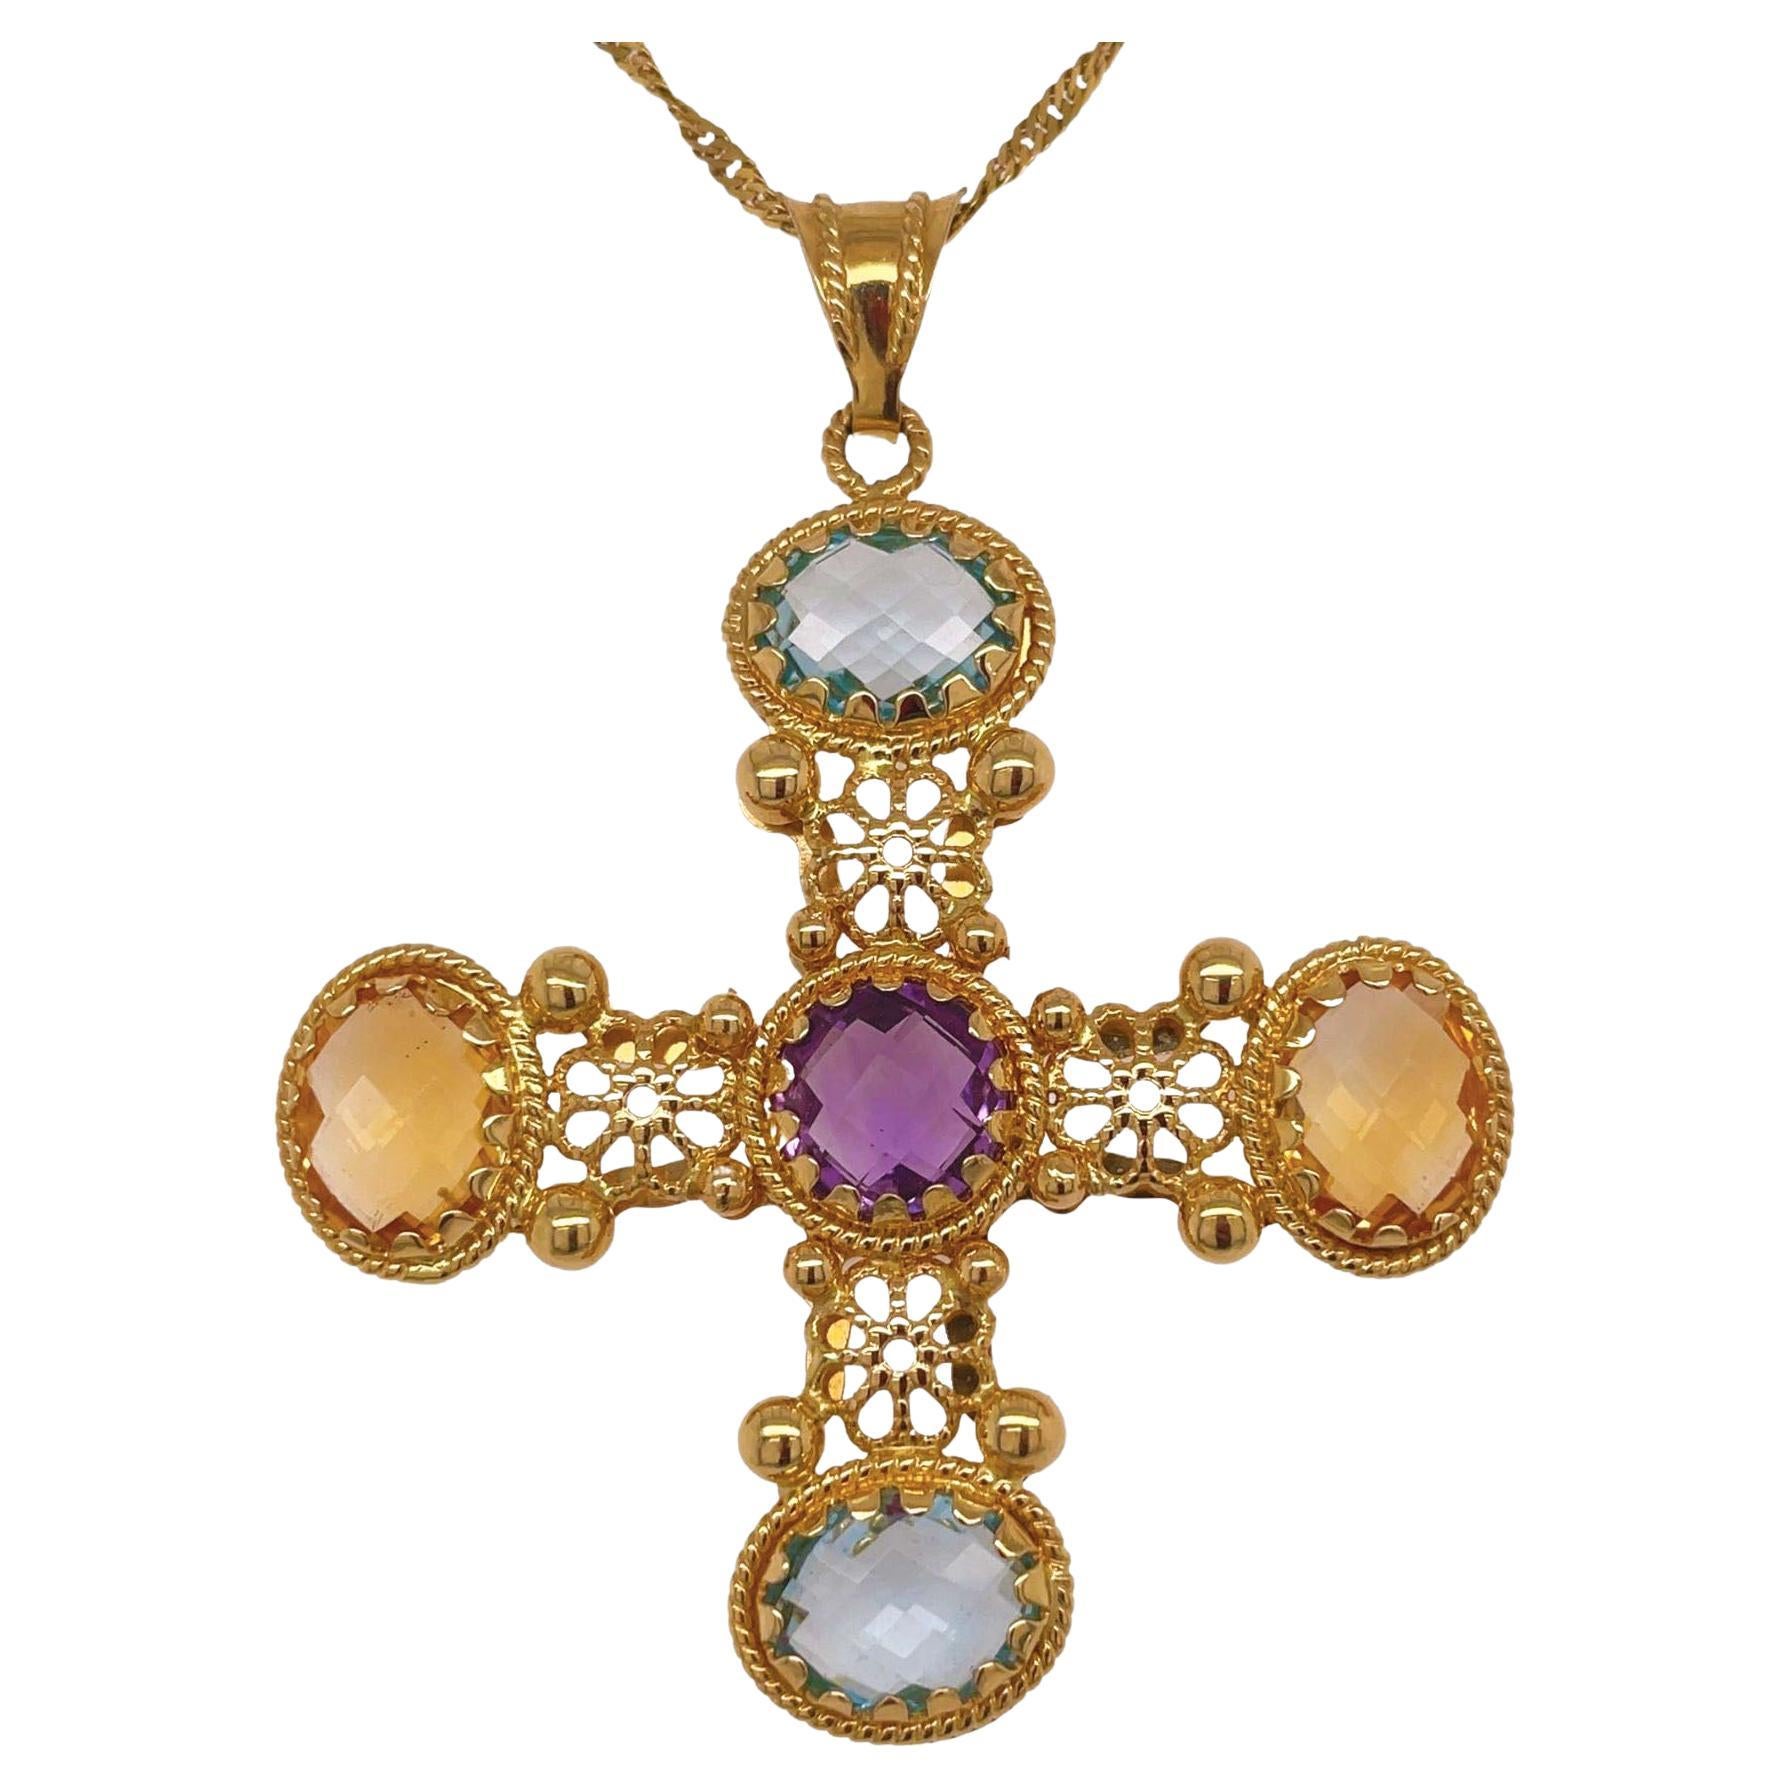 Contemporary 18K Yellow Gold Maltese Cross Multi-Stone Pendant Necklace